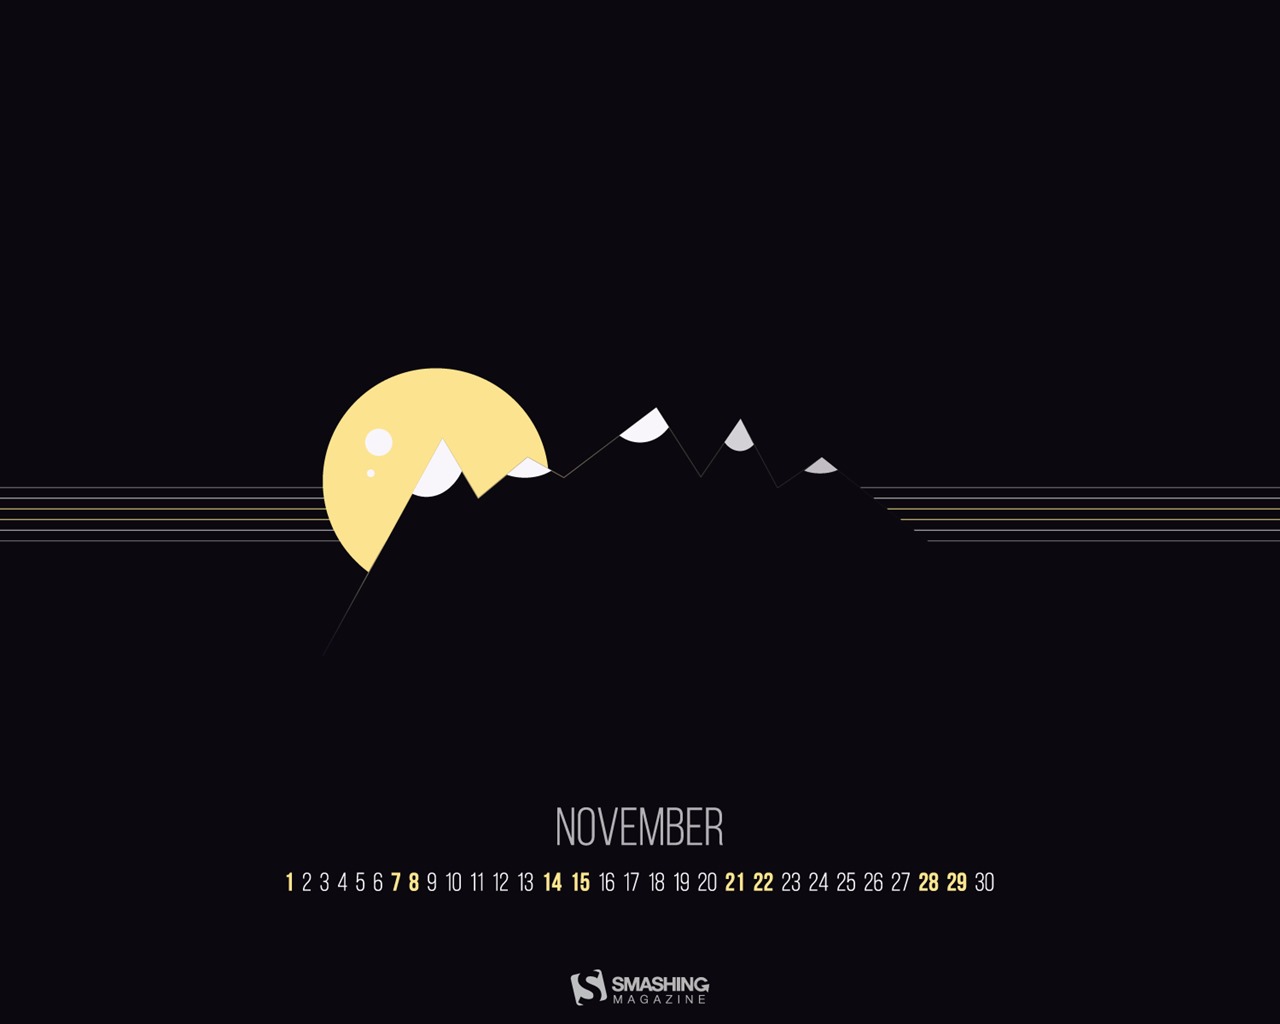 November 2015 Kalender Wallpaper (2) #16 - 1280x1024